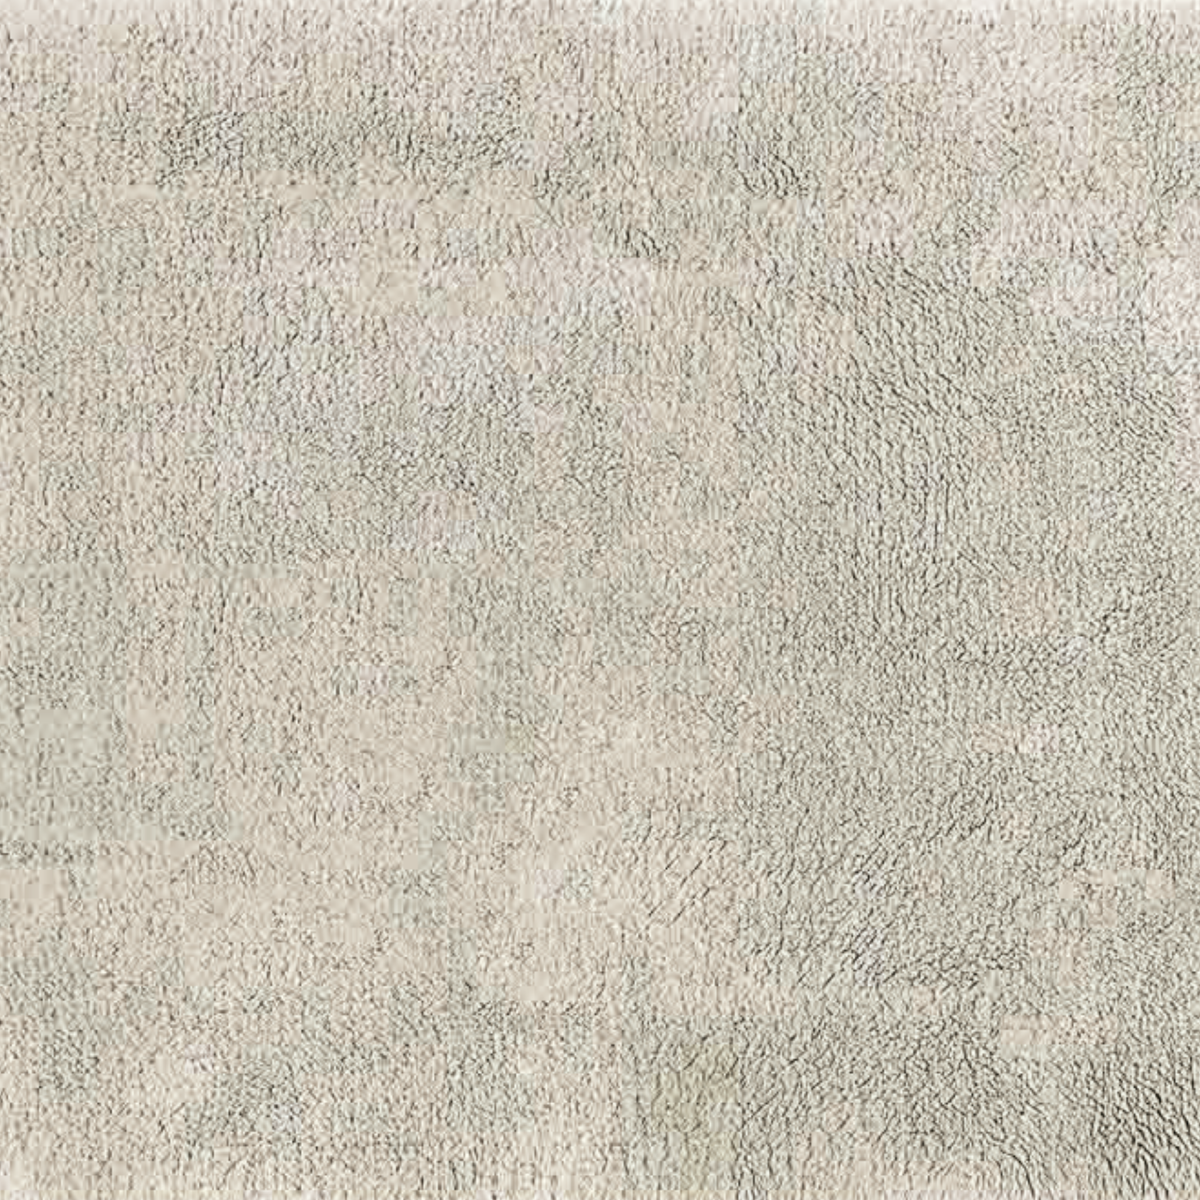 Fabric Closeup of a Fog Graccioza Plain Egoist Bath Rug